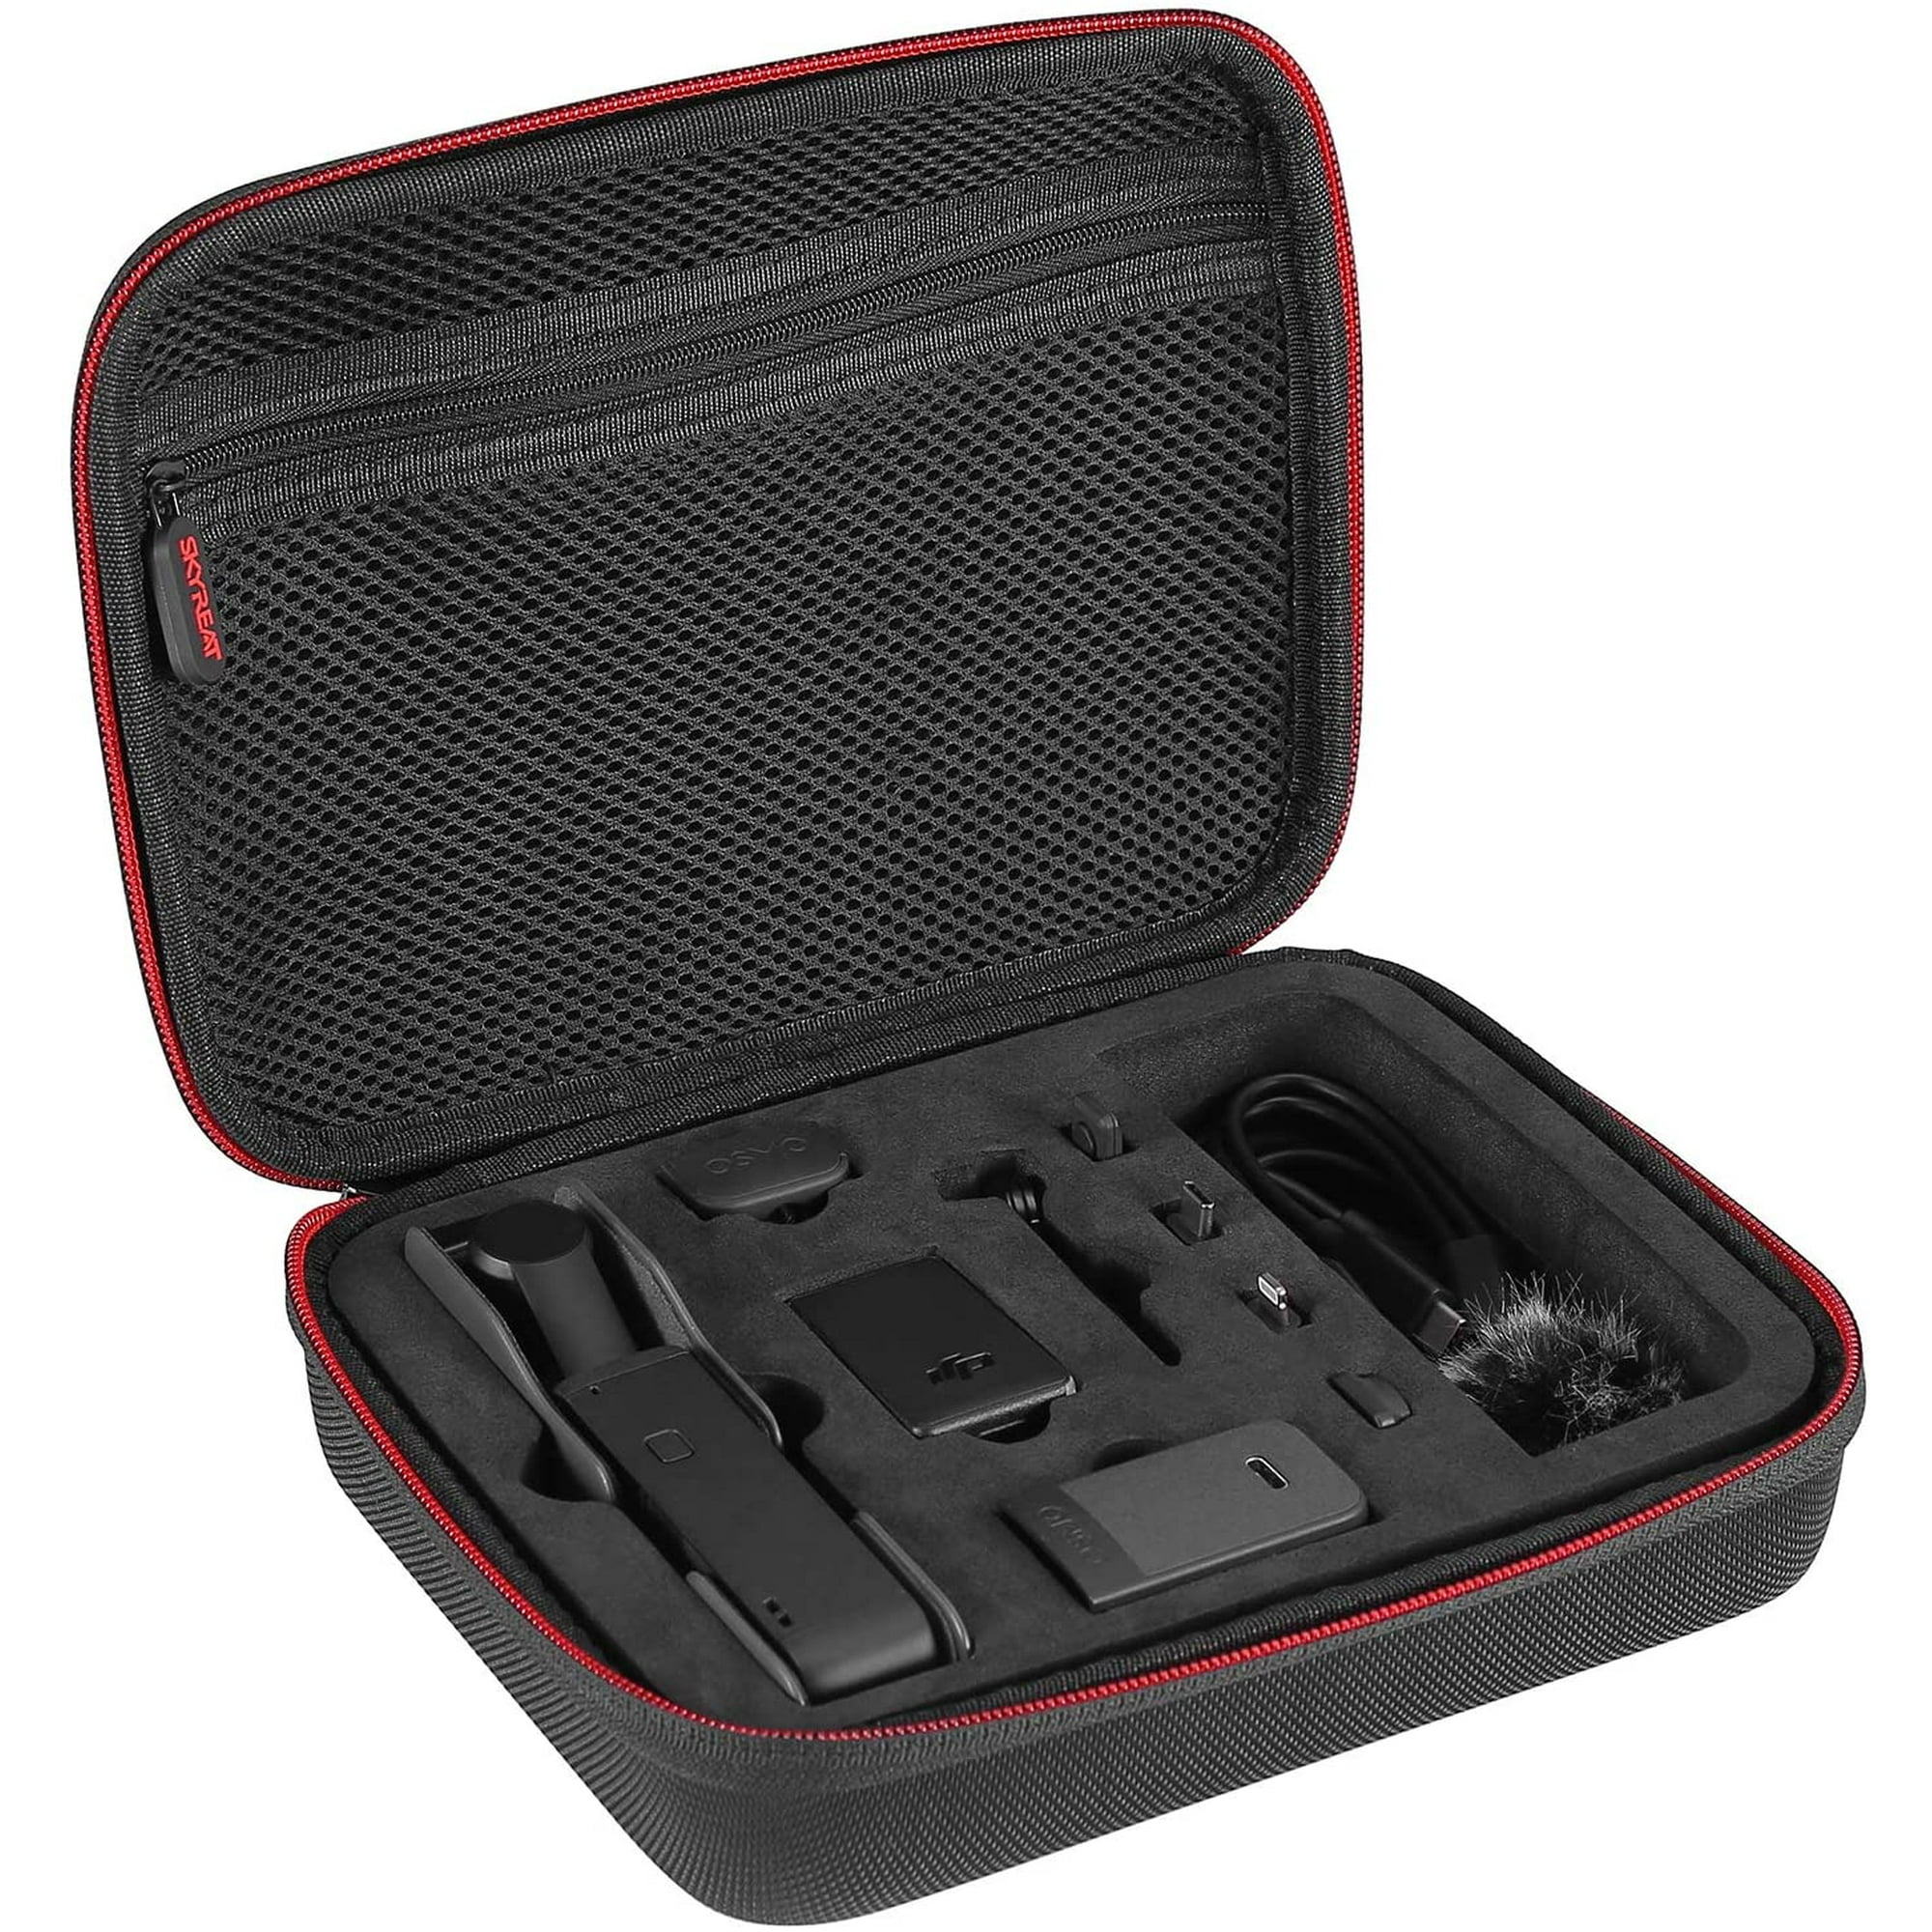 reat Osmo Pocket 2 Case,Portable Travel Carry Bag for DJI Pocket 2